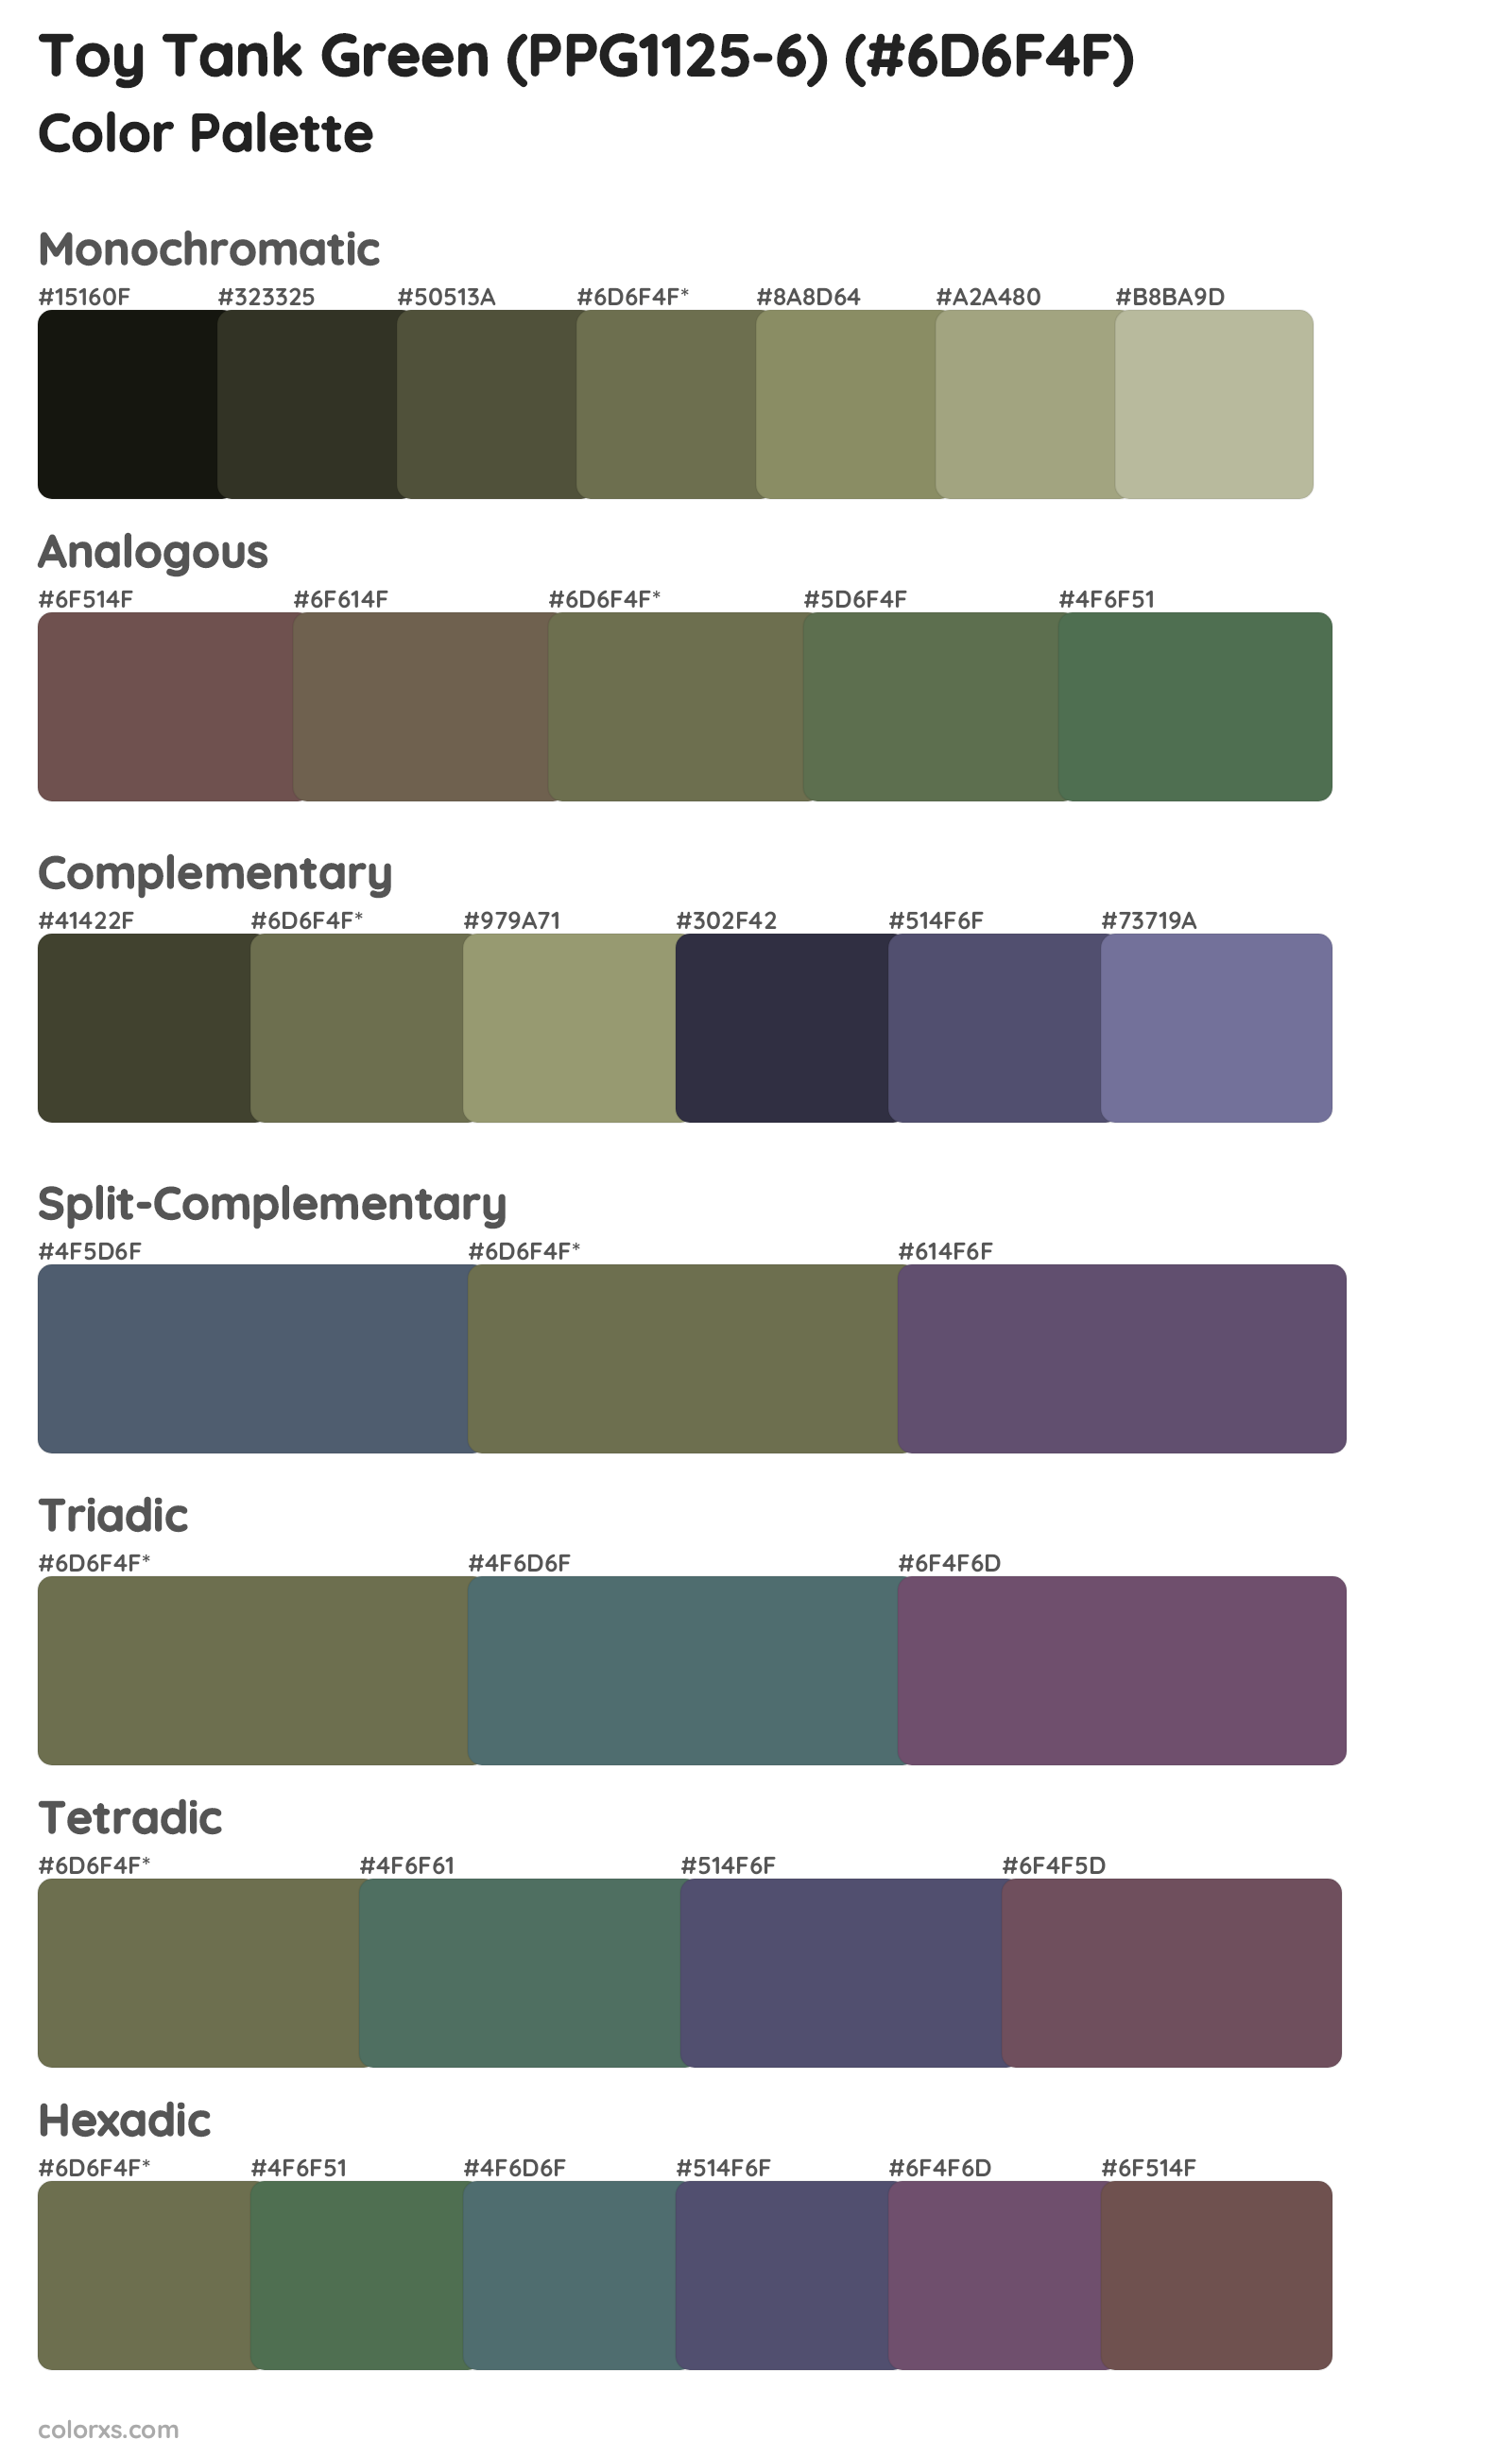 Toy Tank Green (PPG1125-6) Color Scheme Palettes